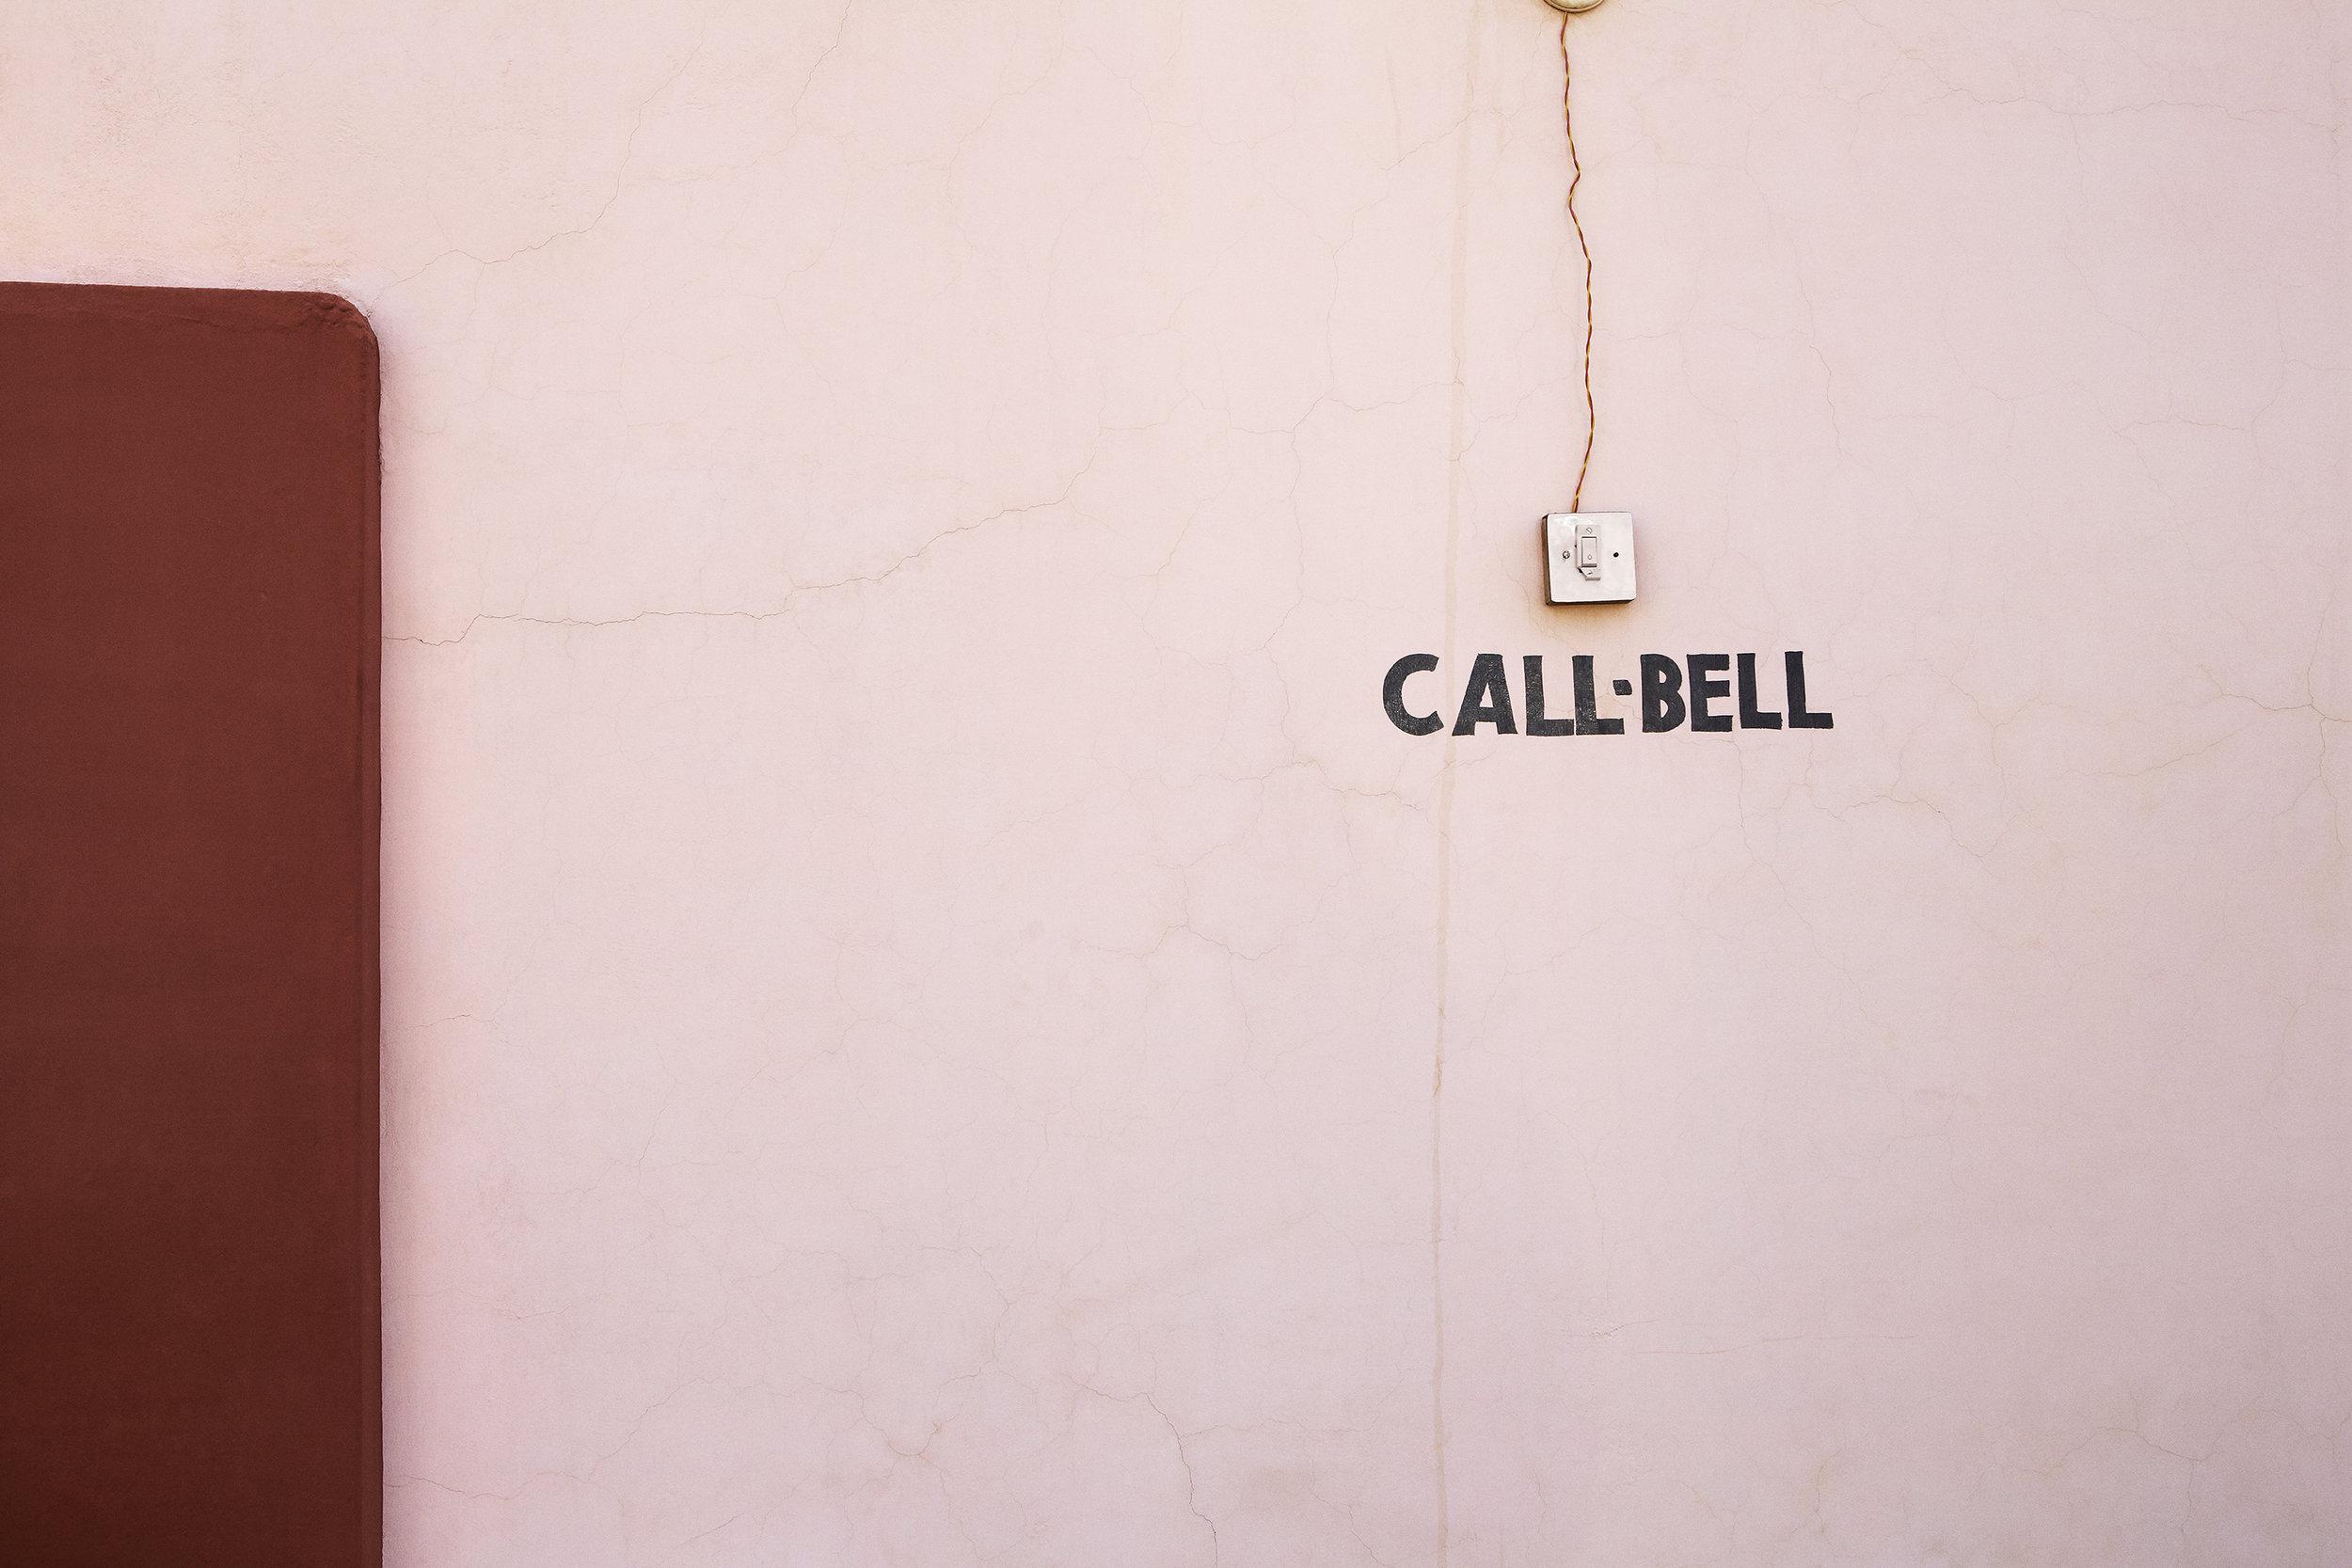 Call-Bell